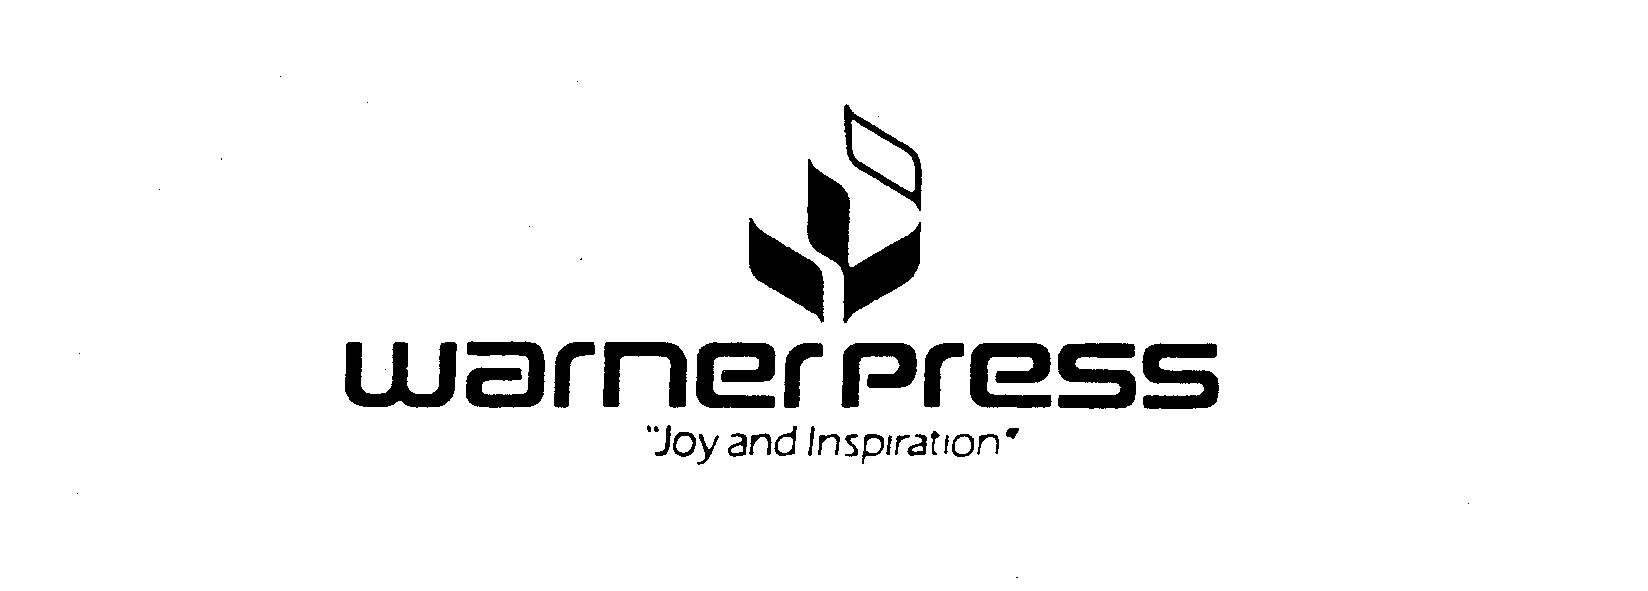  WARNER PRESS "JOY AND INSPIRATION"